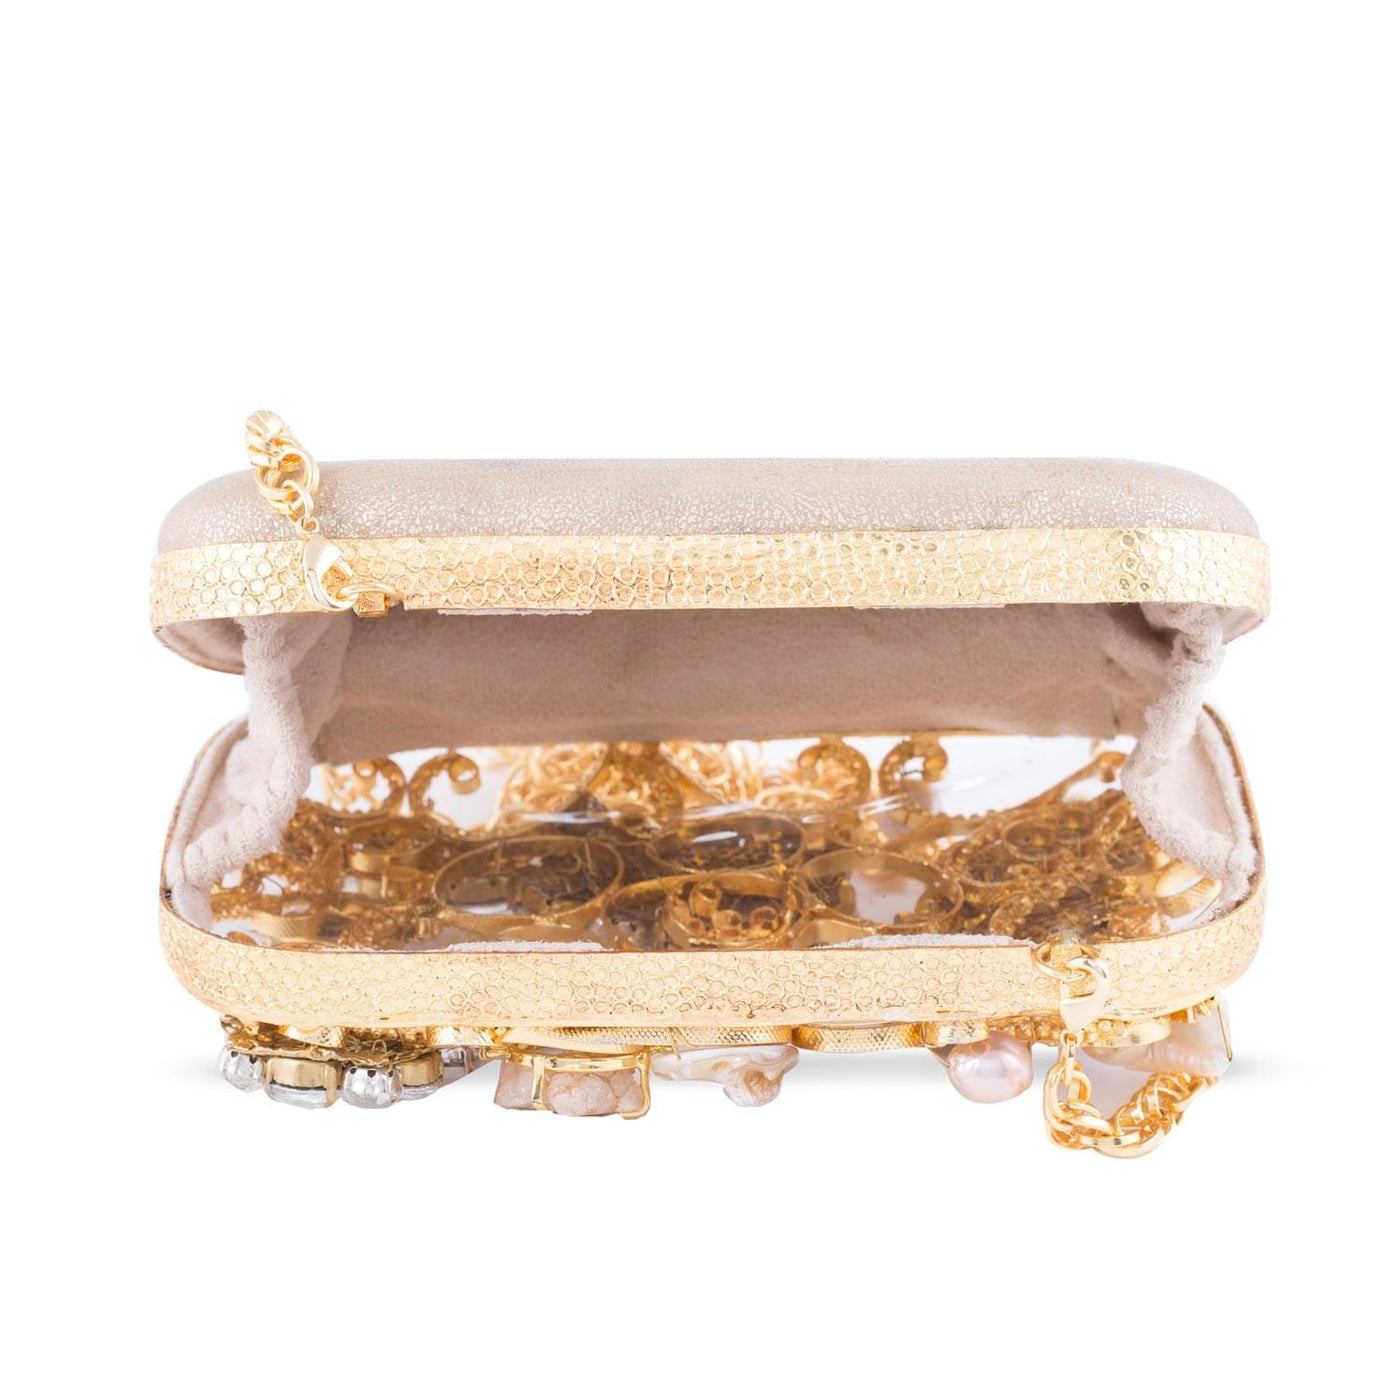 Belle Vignes Rectangle Gold Clutch - Women's bridal and bridesmaids clutch bag